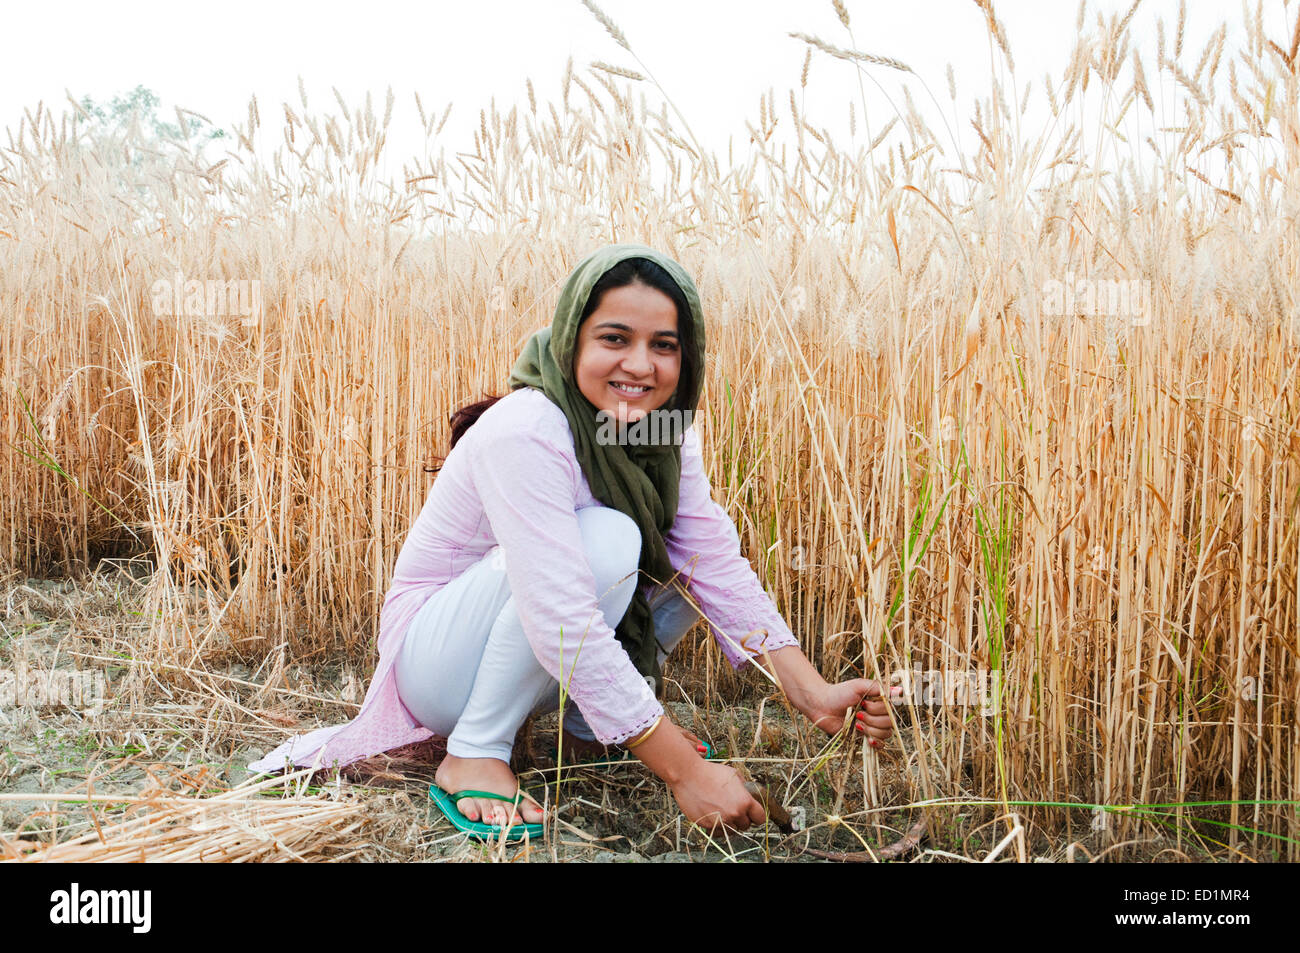 1 indian Village rural girl Cutting Wheat Stock Photo